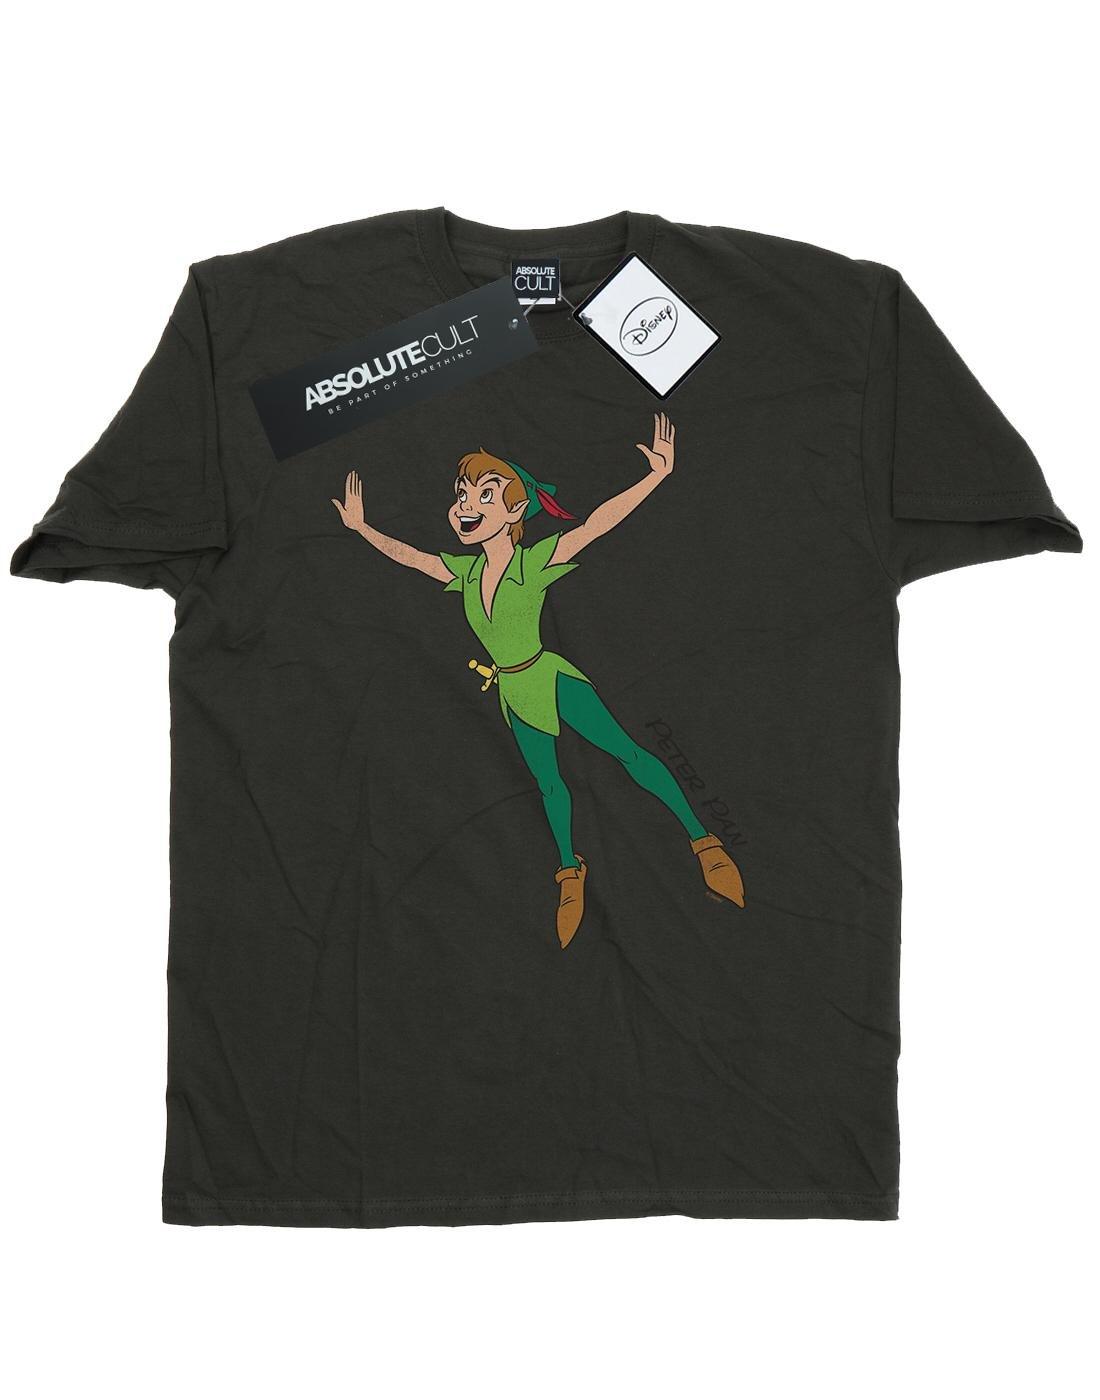 Classic Tshirt Herren Taubengrau M von Peter Pan